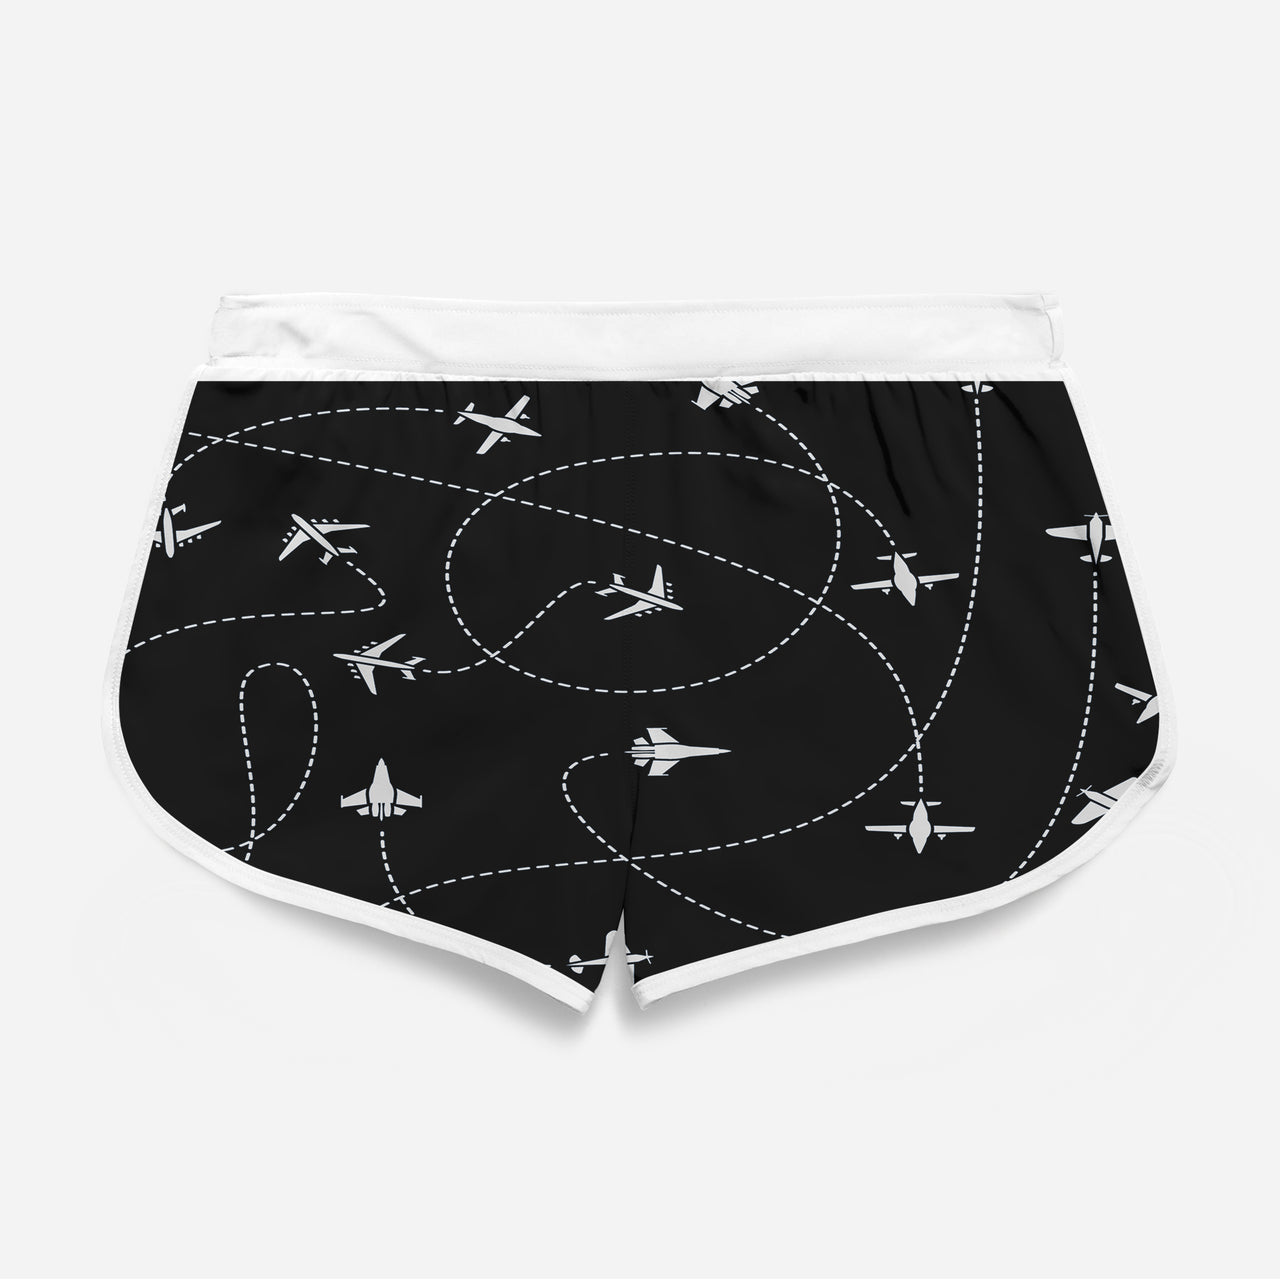 Travel The World By Plane (Black) Designed Women Beach Style Shorts